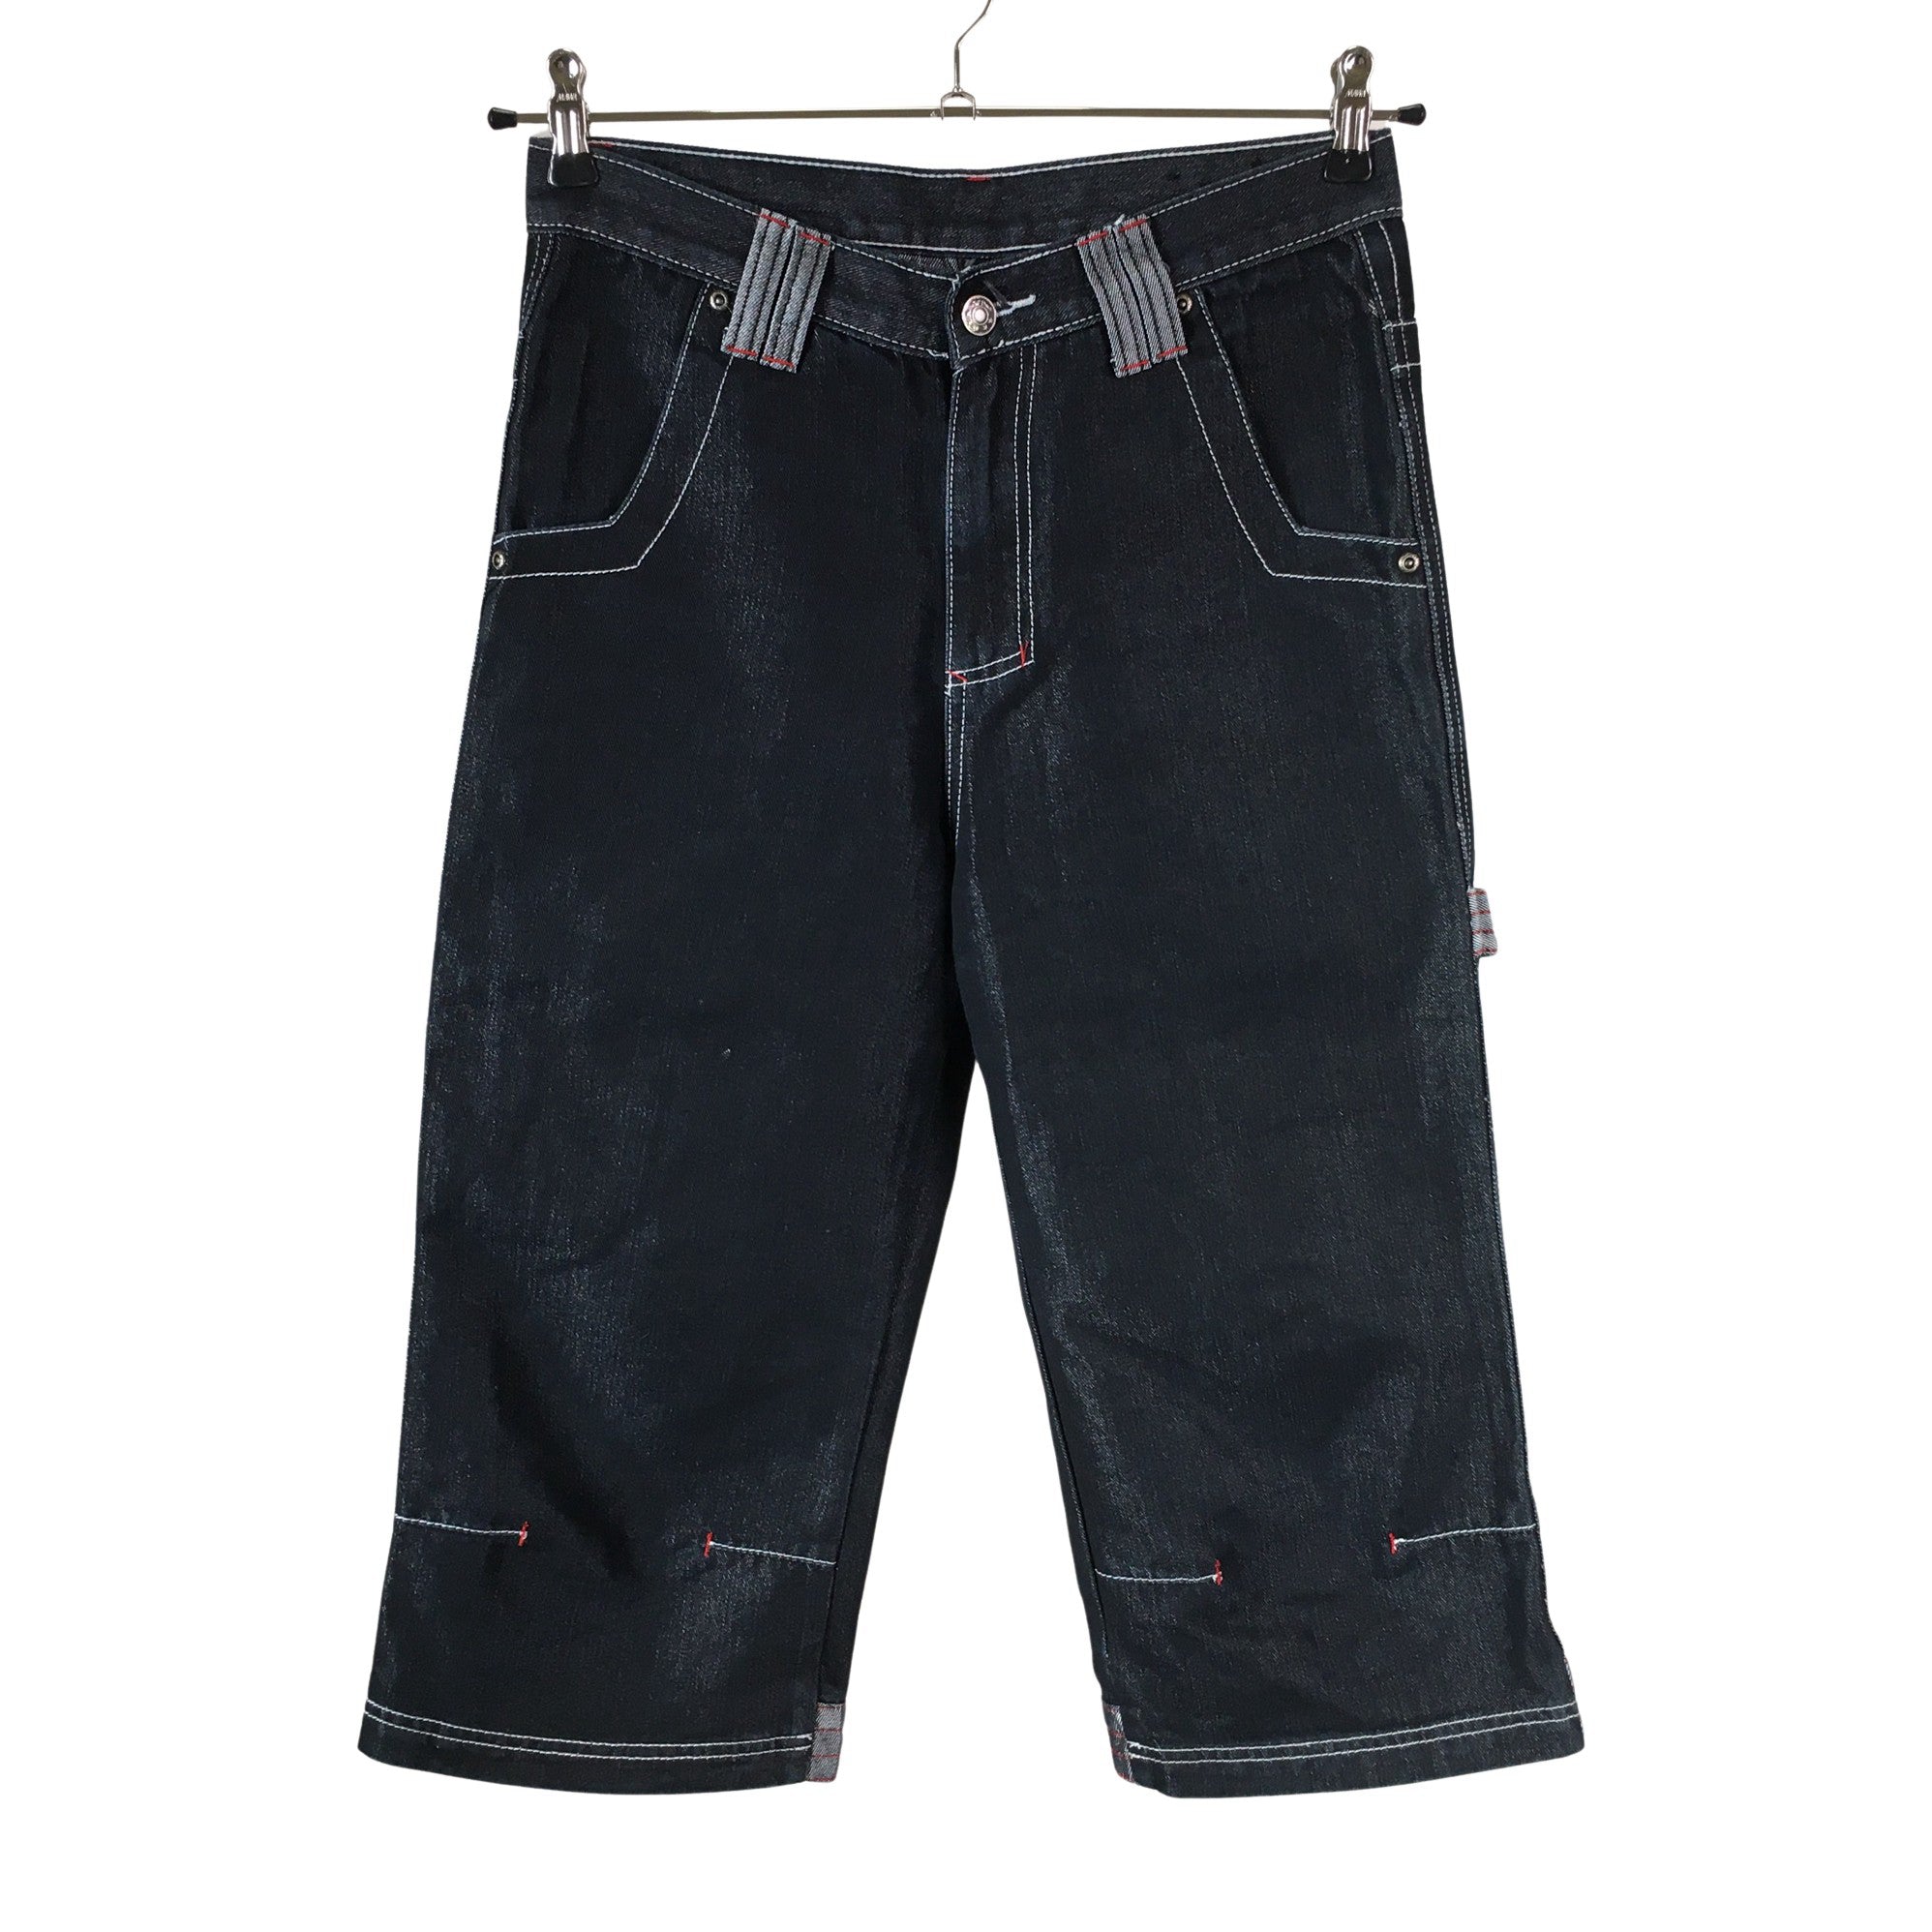 Women's Bazz Jeans Capri jeans, size 40 (Grey)